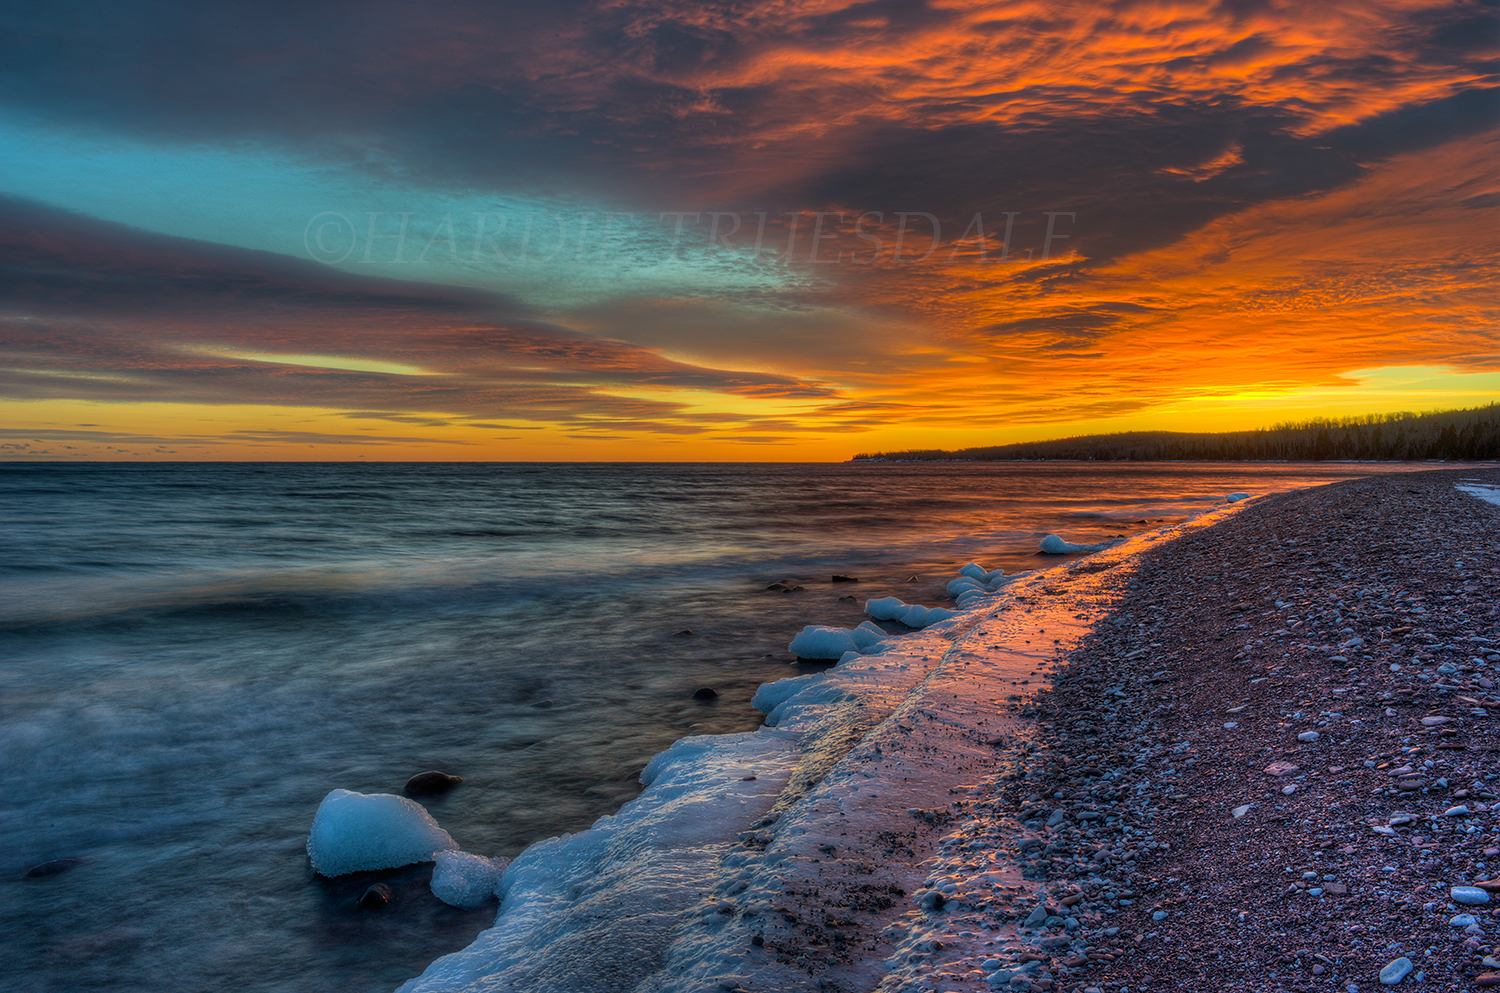  MN#155 "Superior Sunset, North Shore, Lake Superior' 